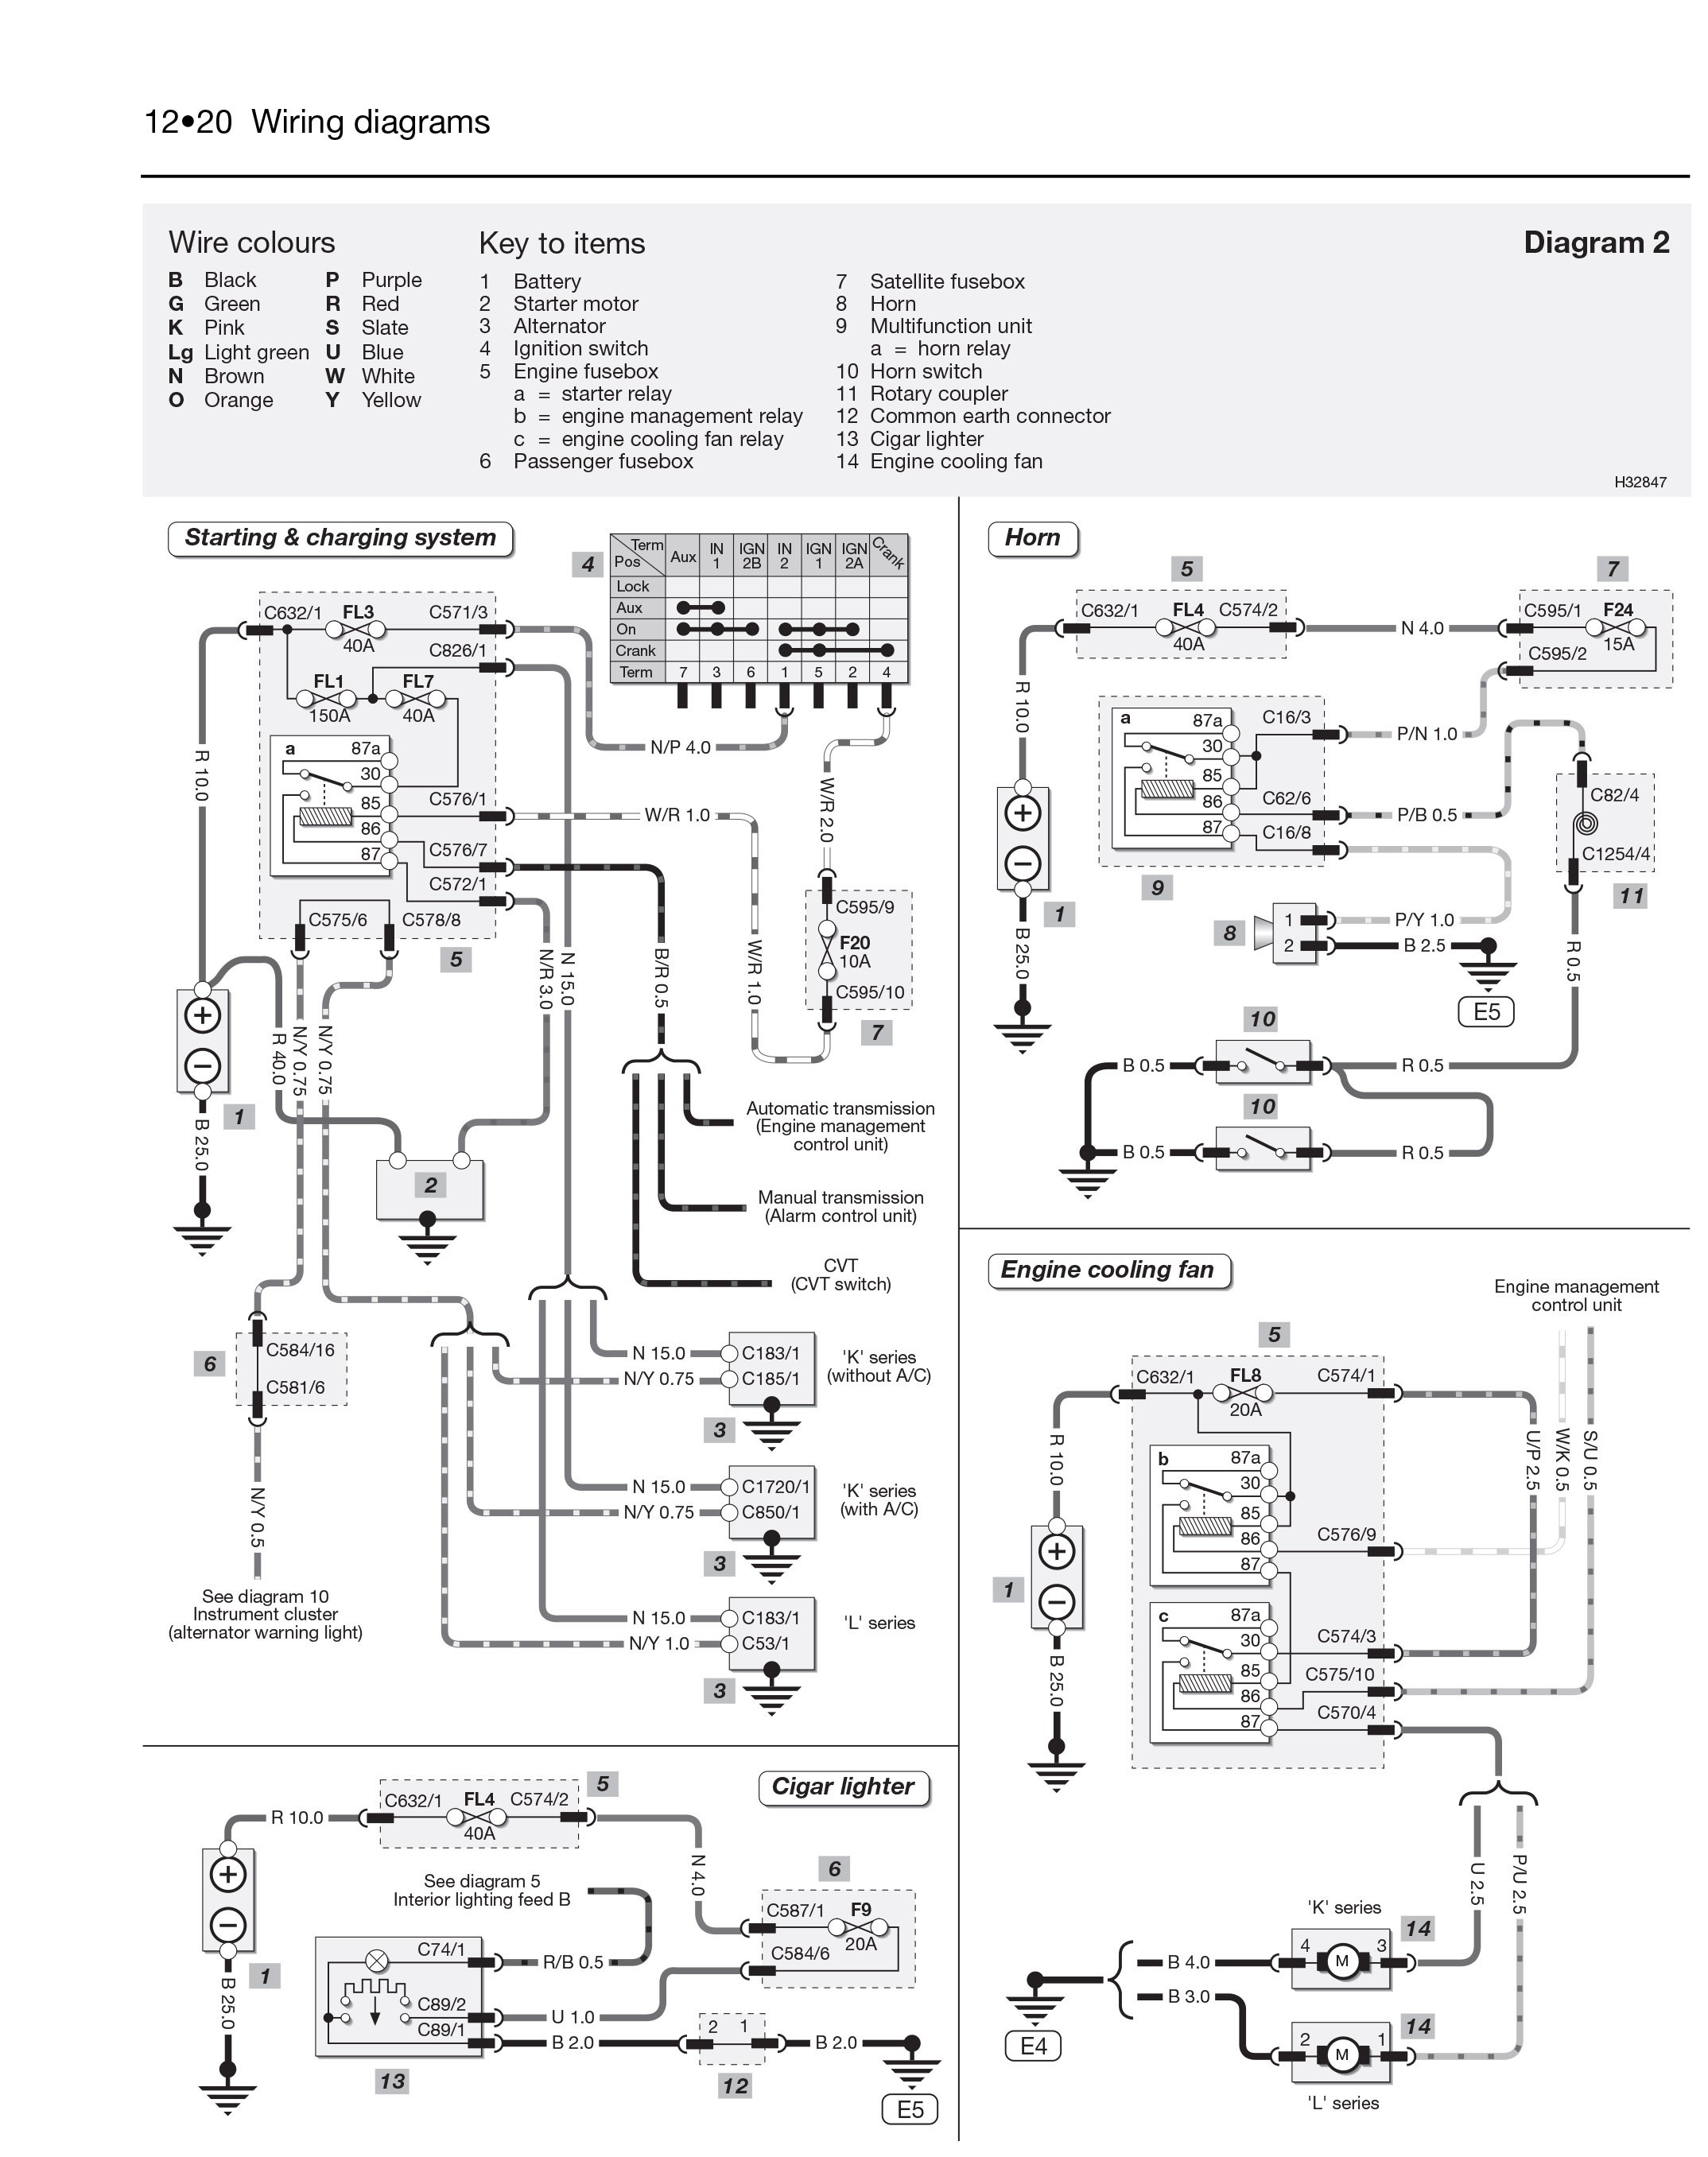 Electrical Wiring Diagrams Elegant Generous Rover 25 Wiring Diagram S Electrical Circuit